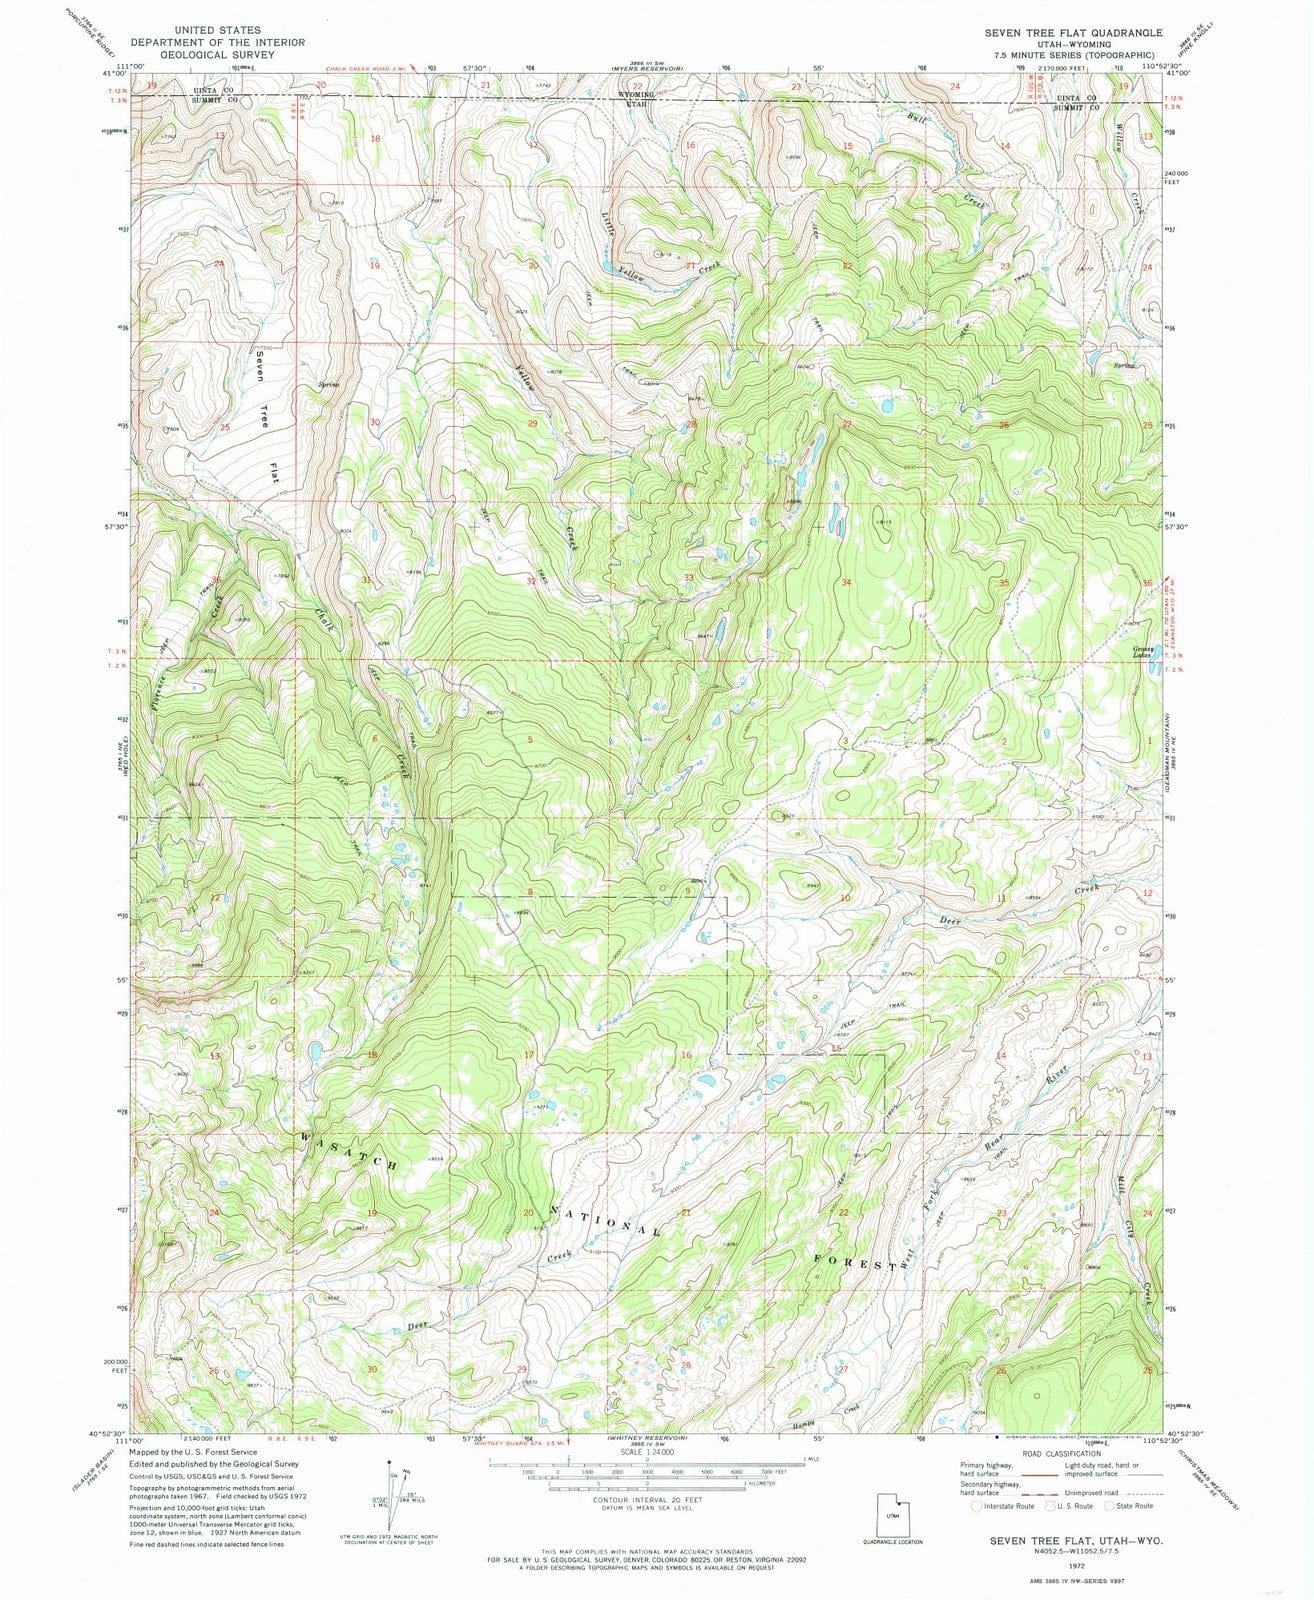 1972 Seven Tree Flat, UT - Utah - USGS Topographic Map